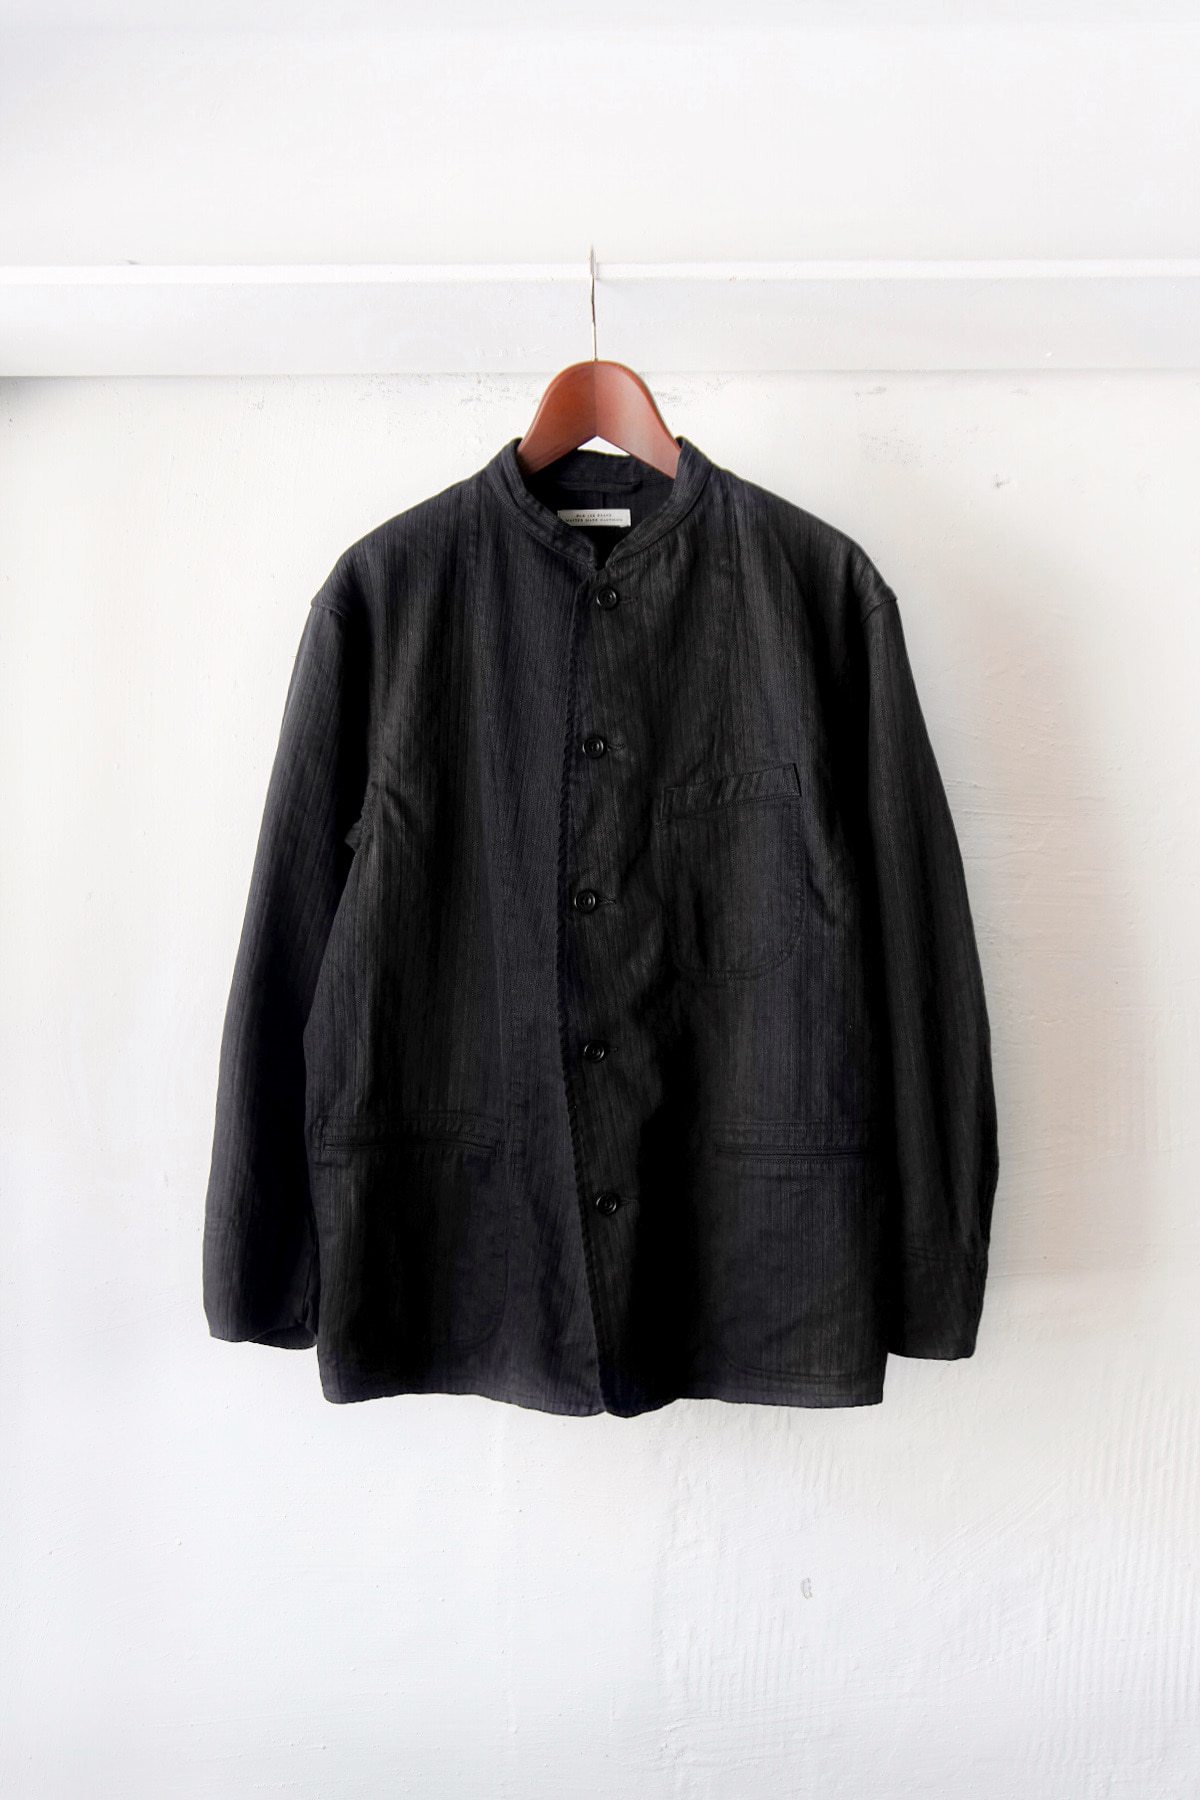 [OLD JOE BRAND] Stand Collar Rover Jacket - Black